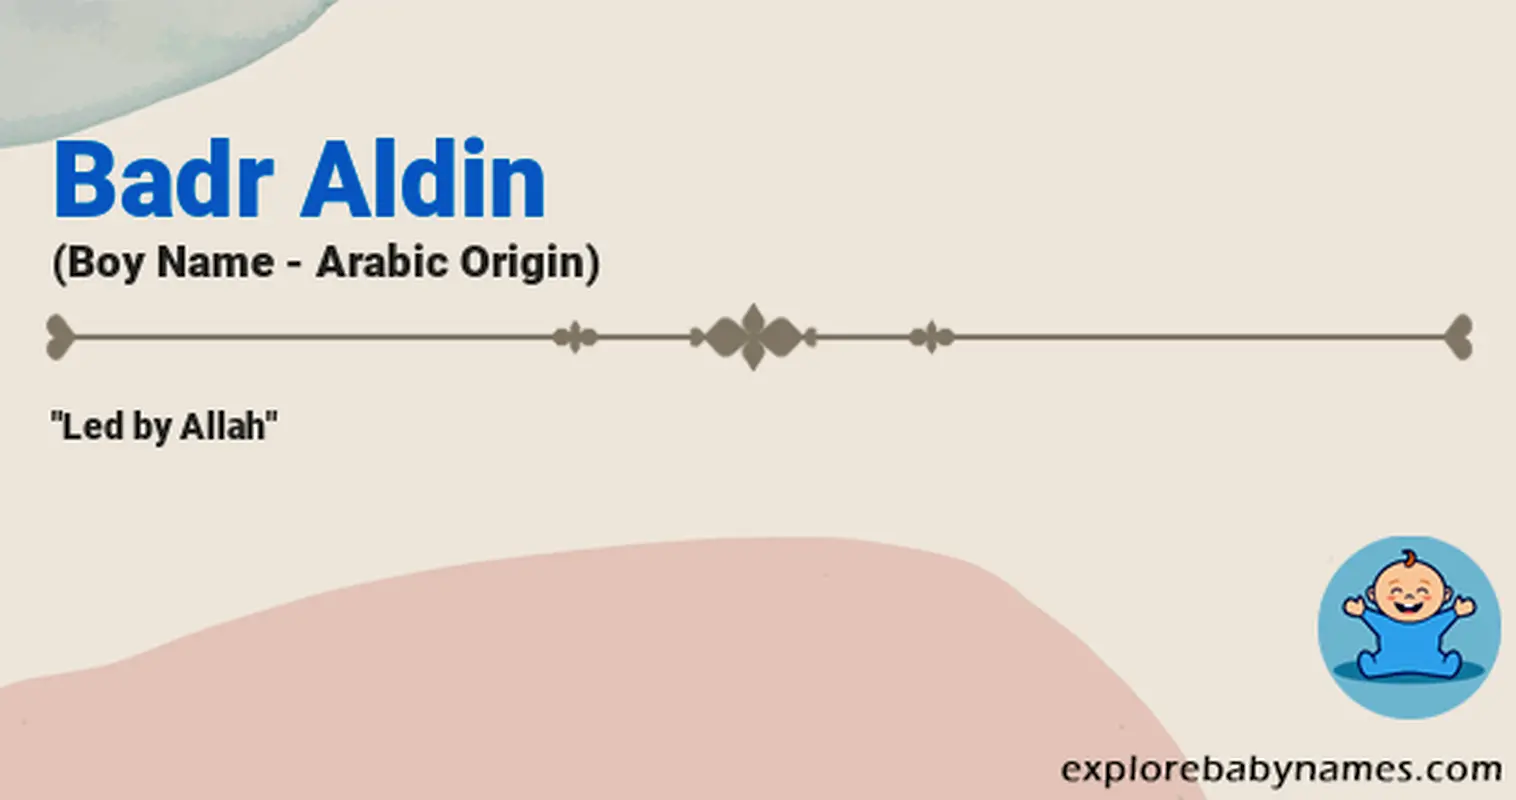 Meaning of Badr Aldin